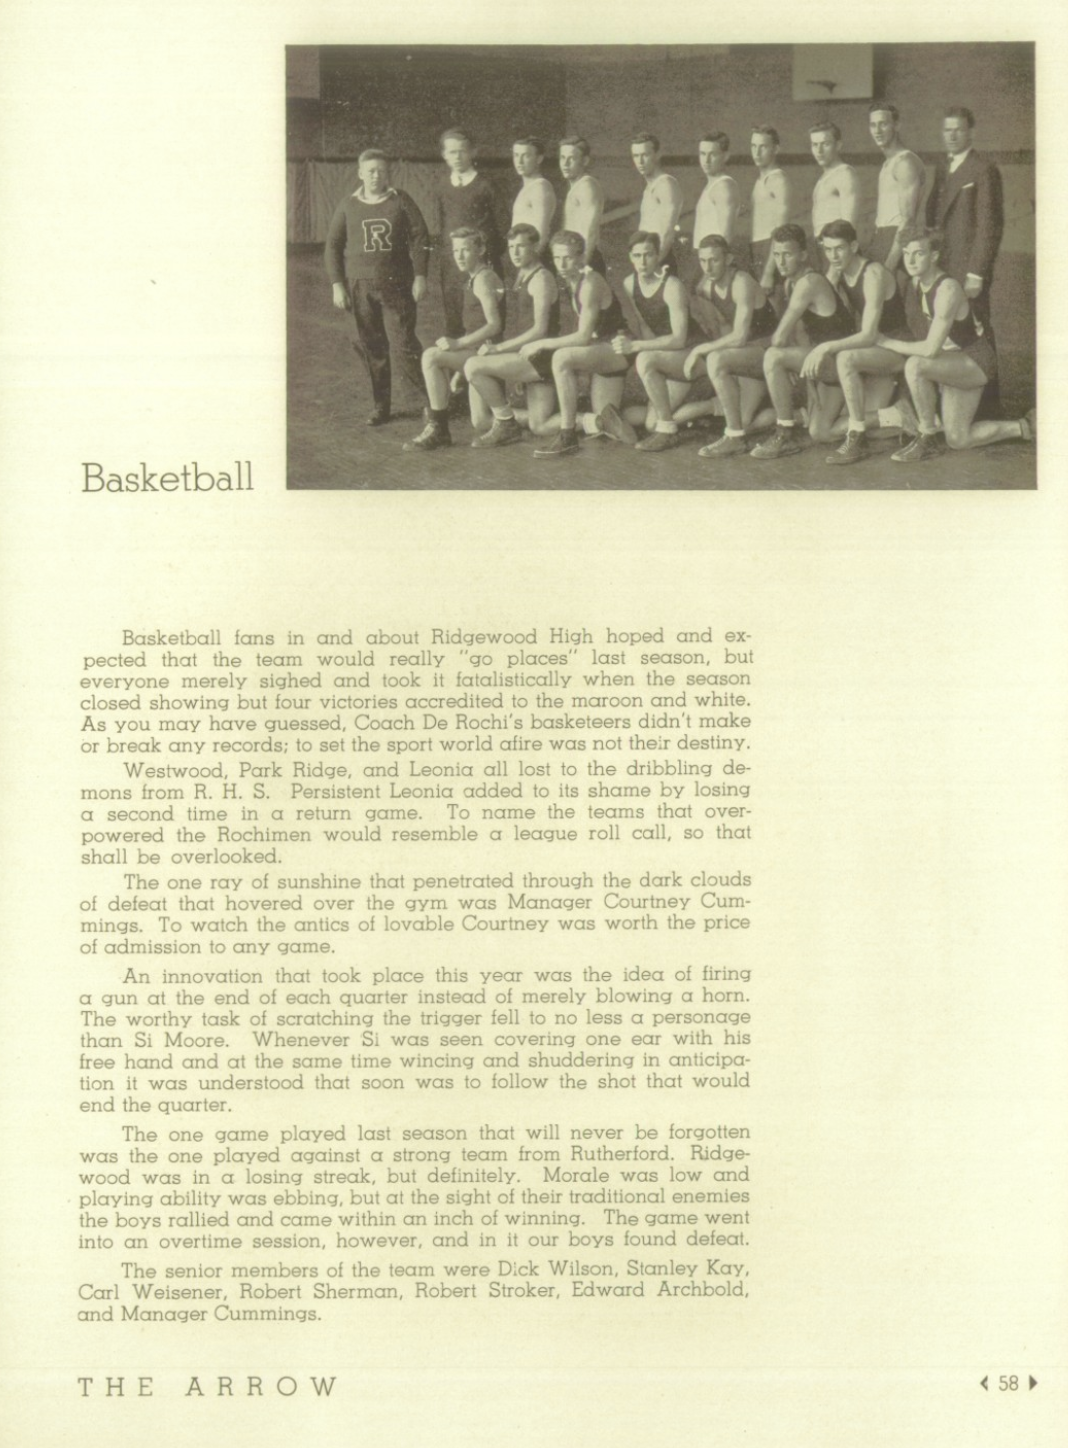 1938 Boys’ Basketball Team